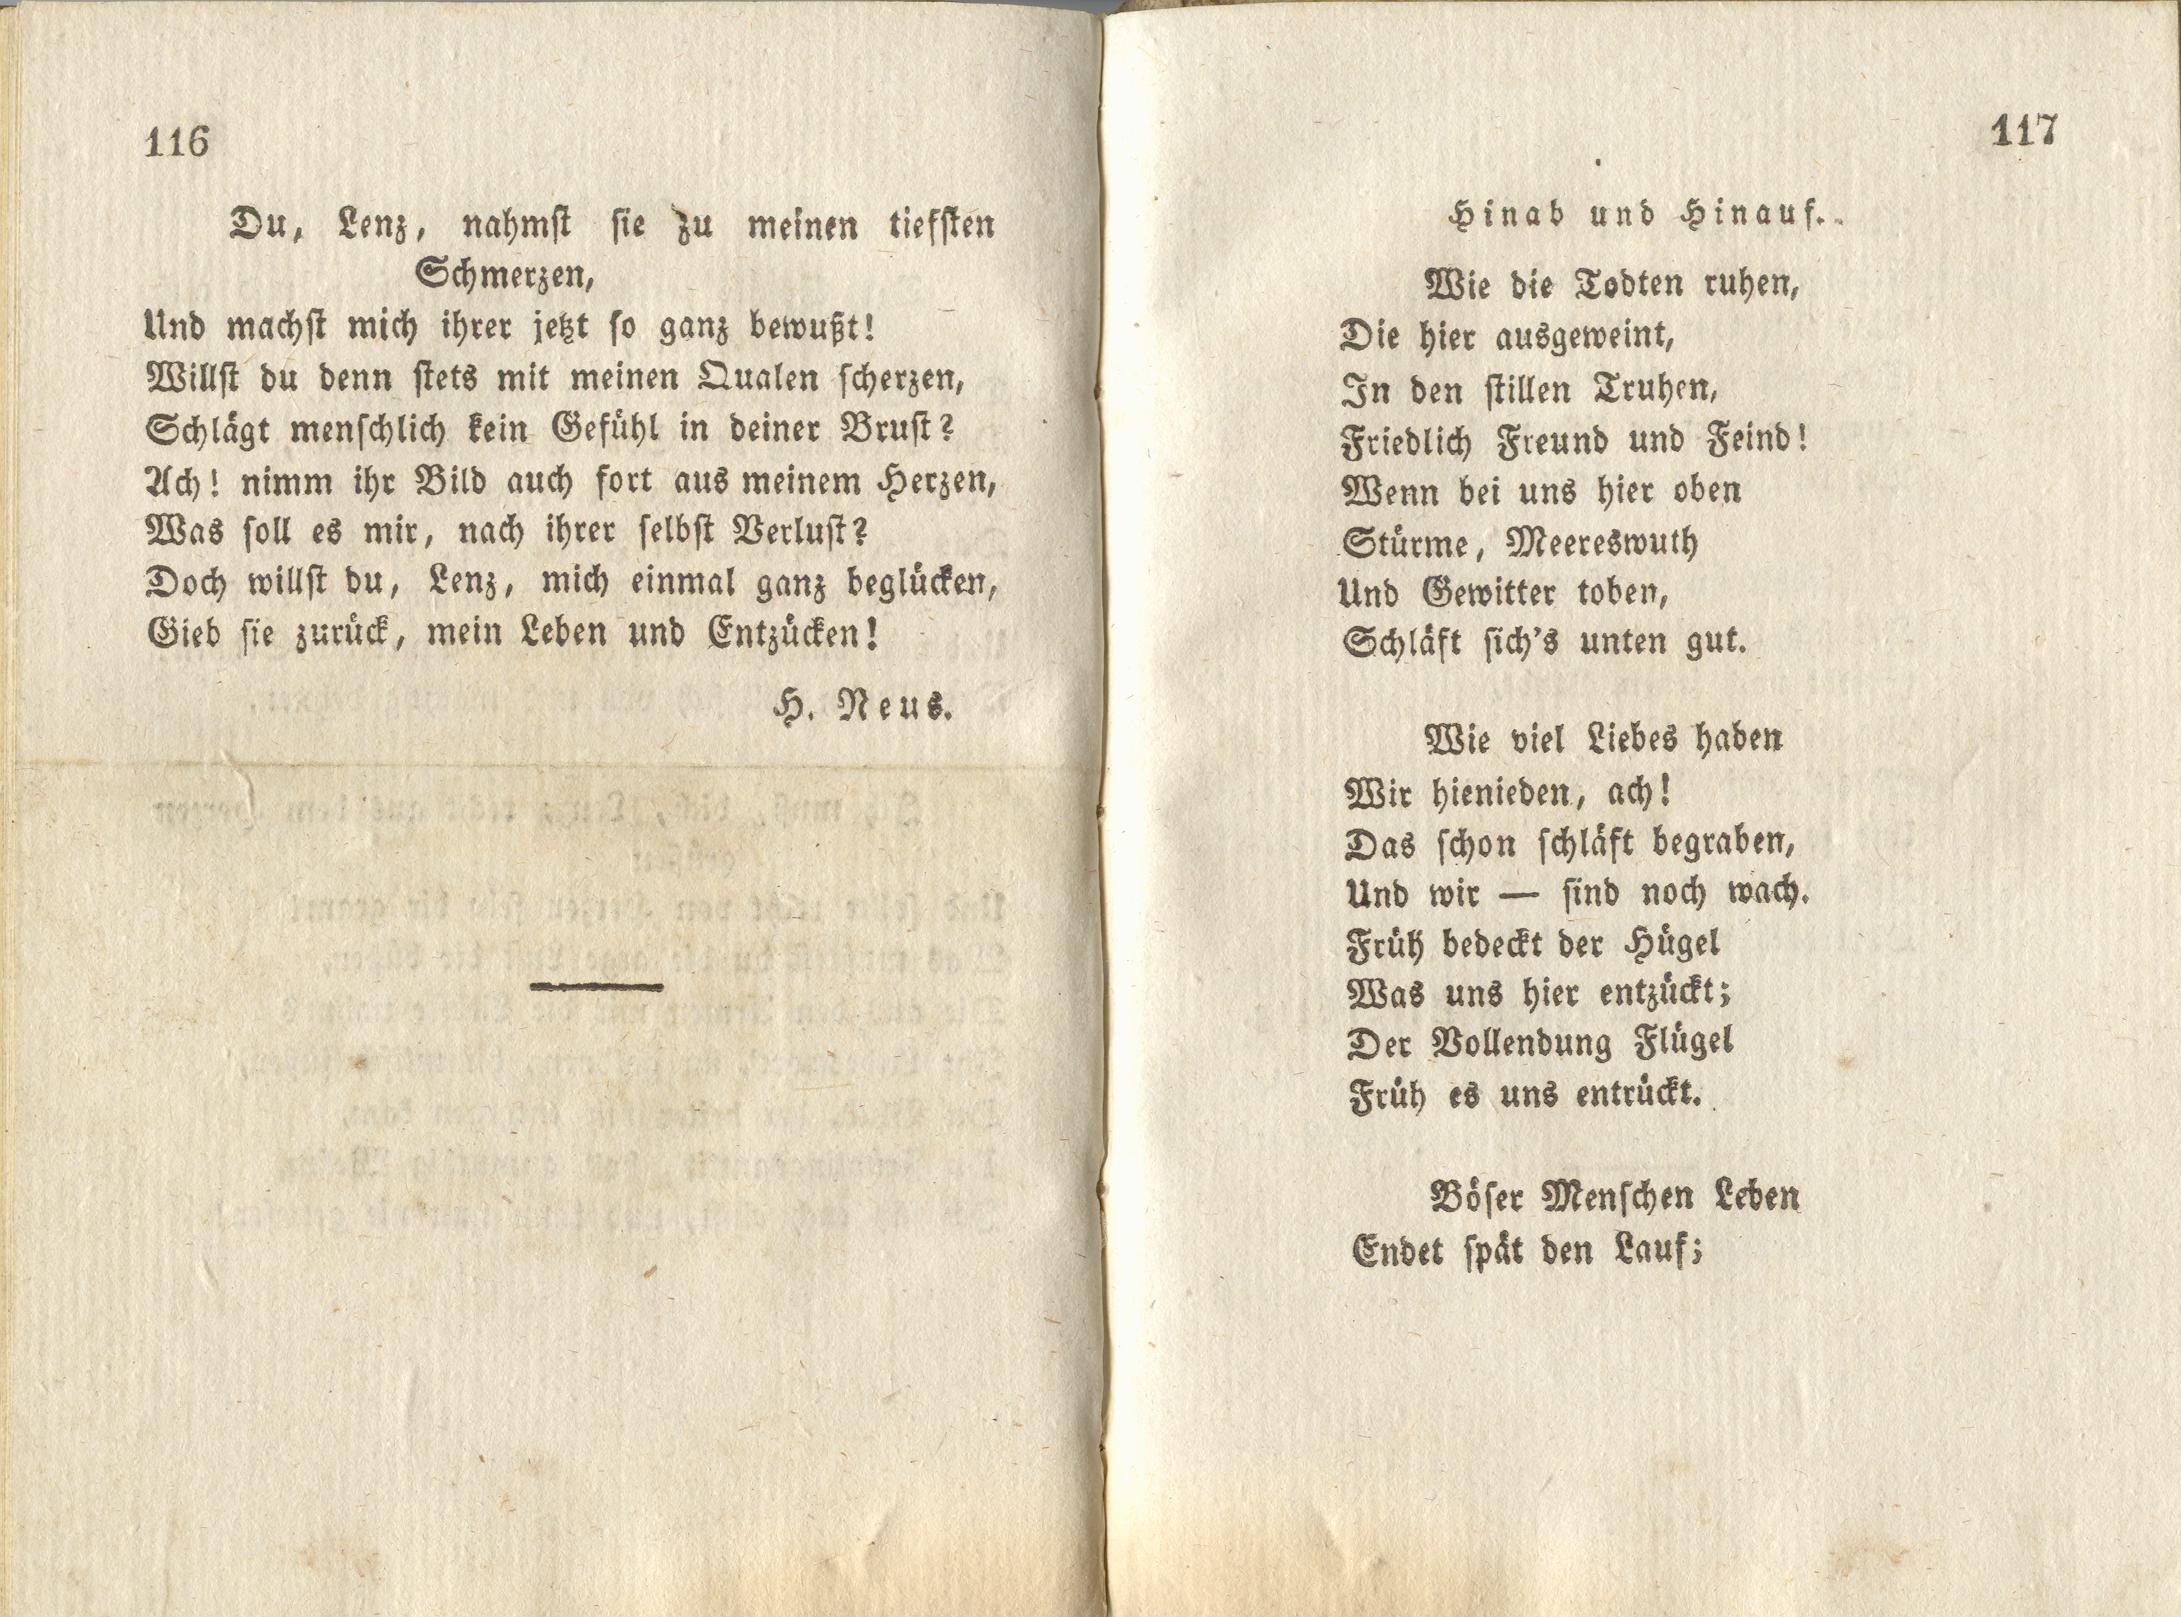 Hinab und Hinauf (1828) | 1. (116-117) Основной текст